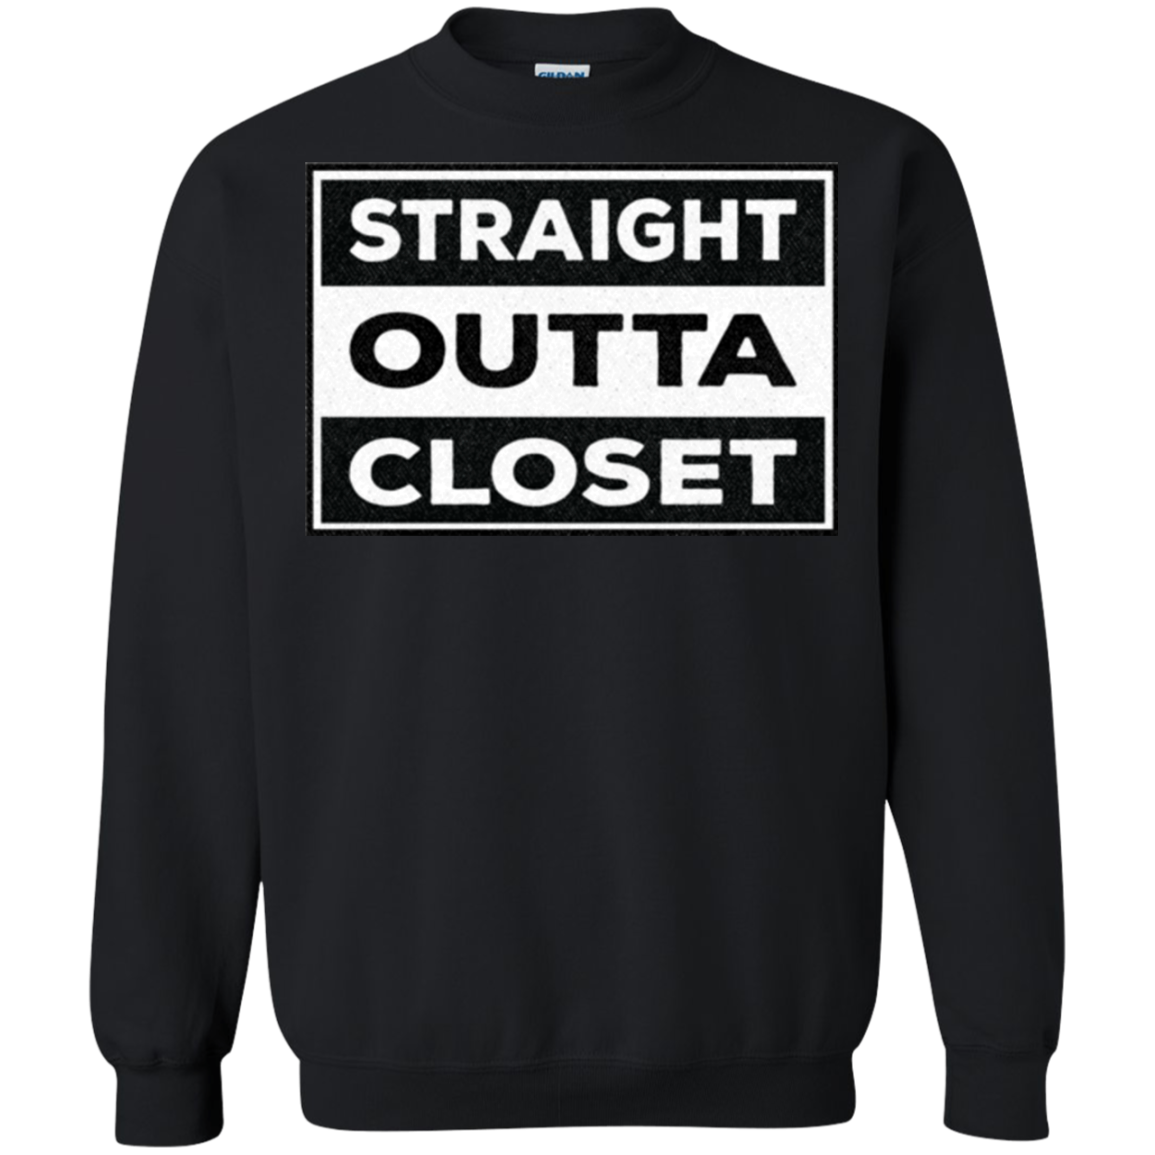 Straight Outta Closet Pride Shirt